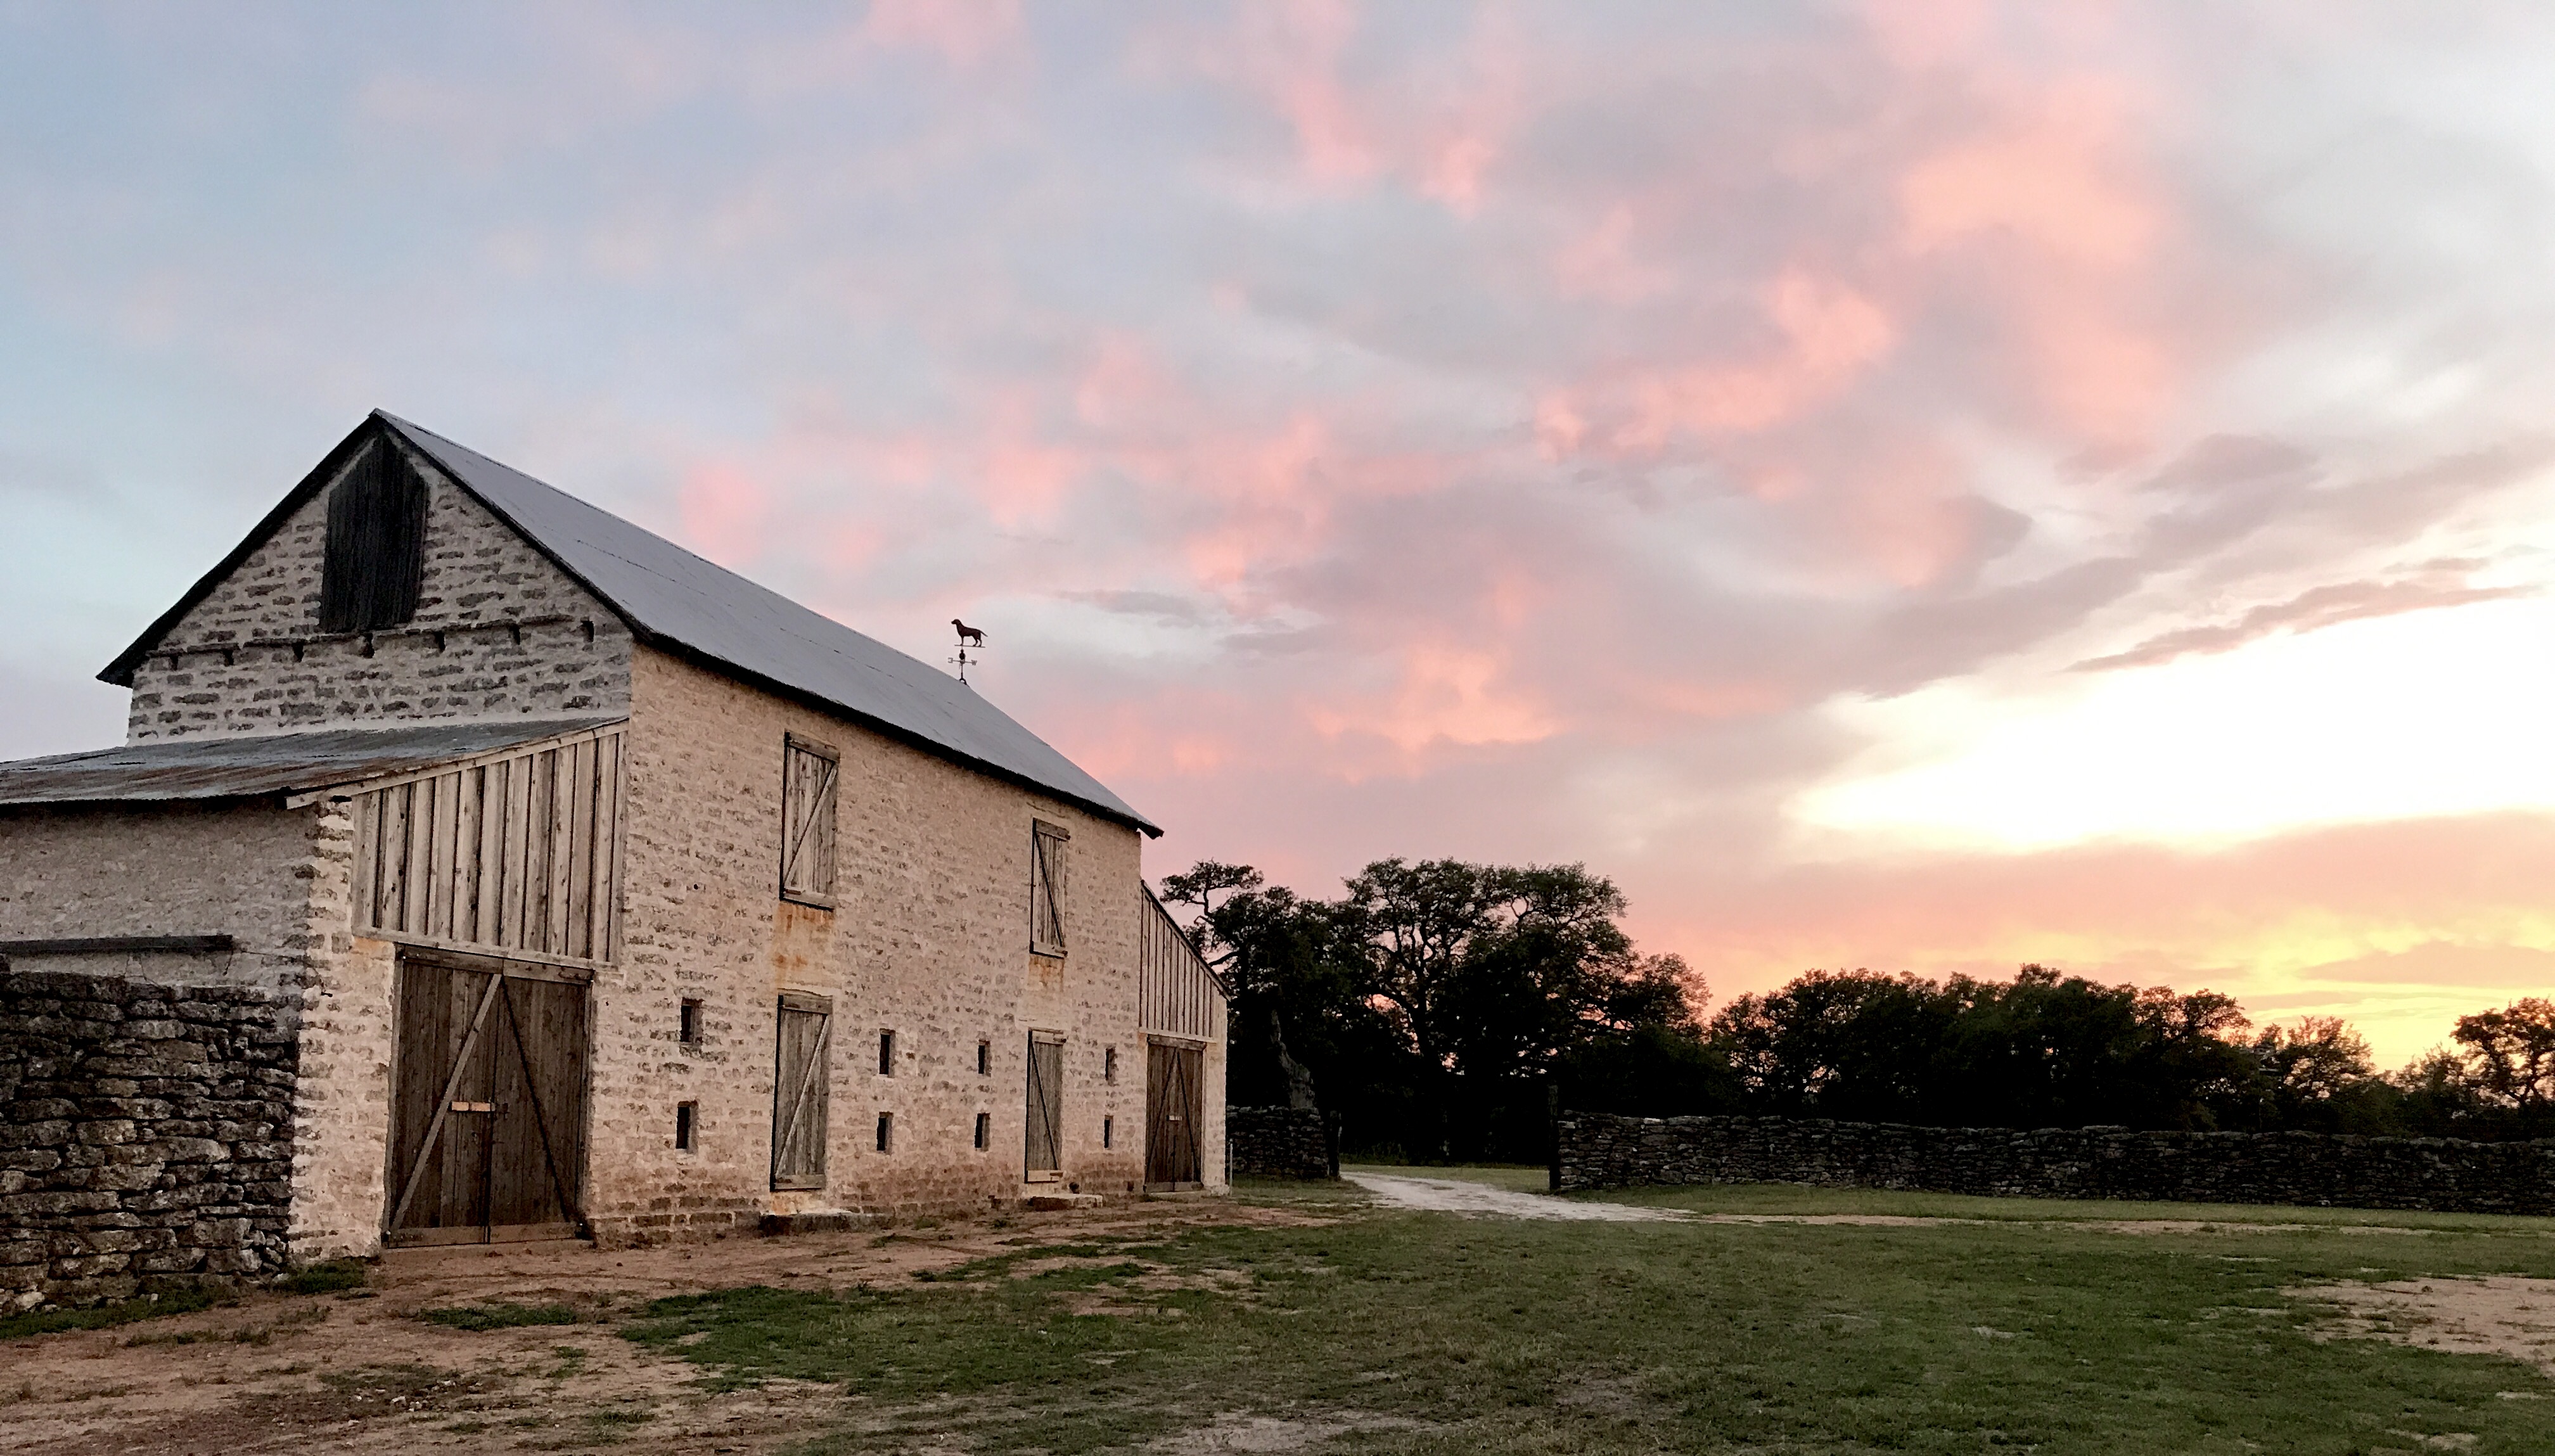 Questad Farm in Bosque County, Texas: A Case Study